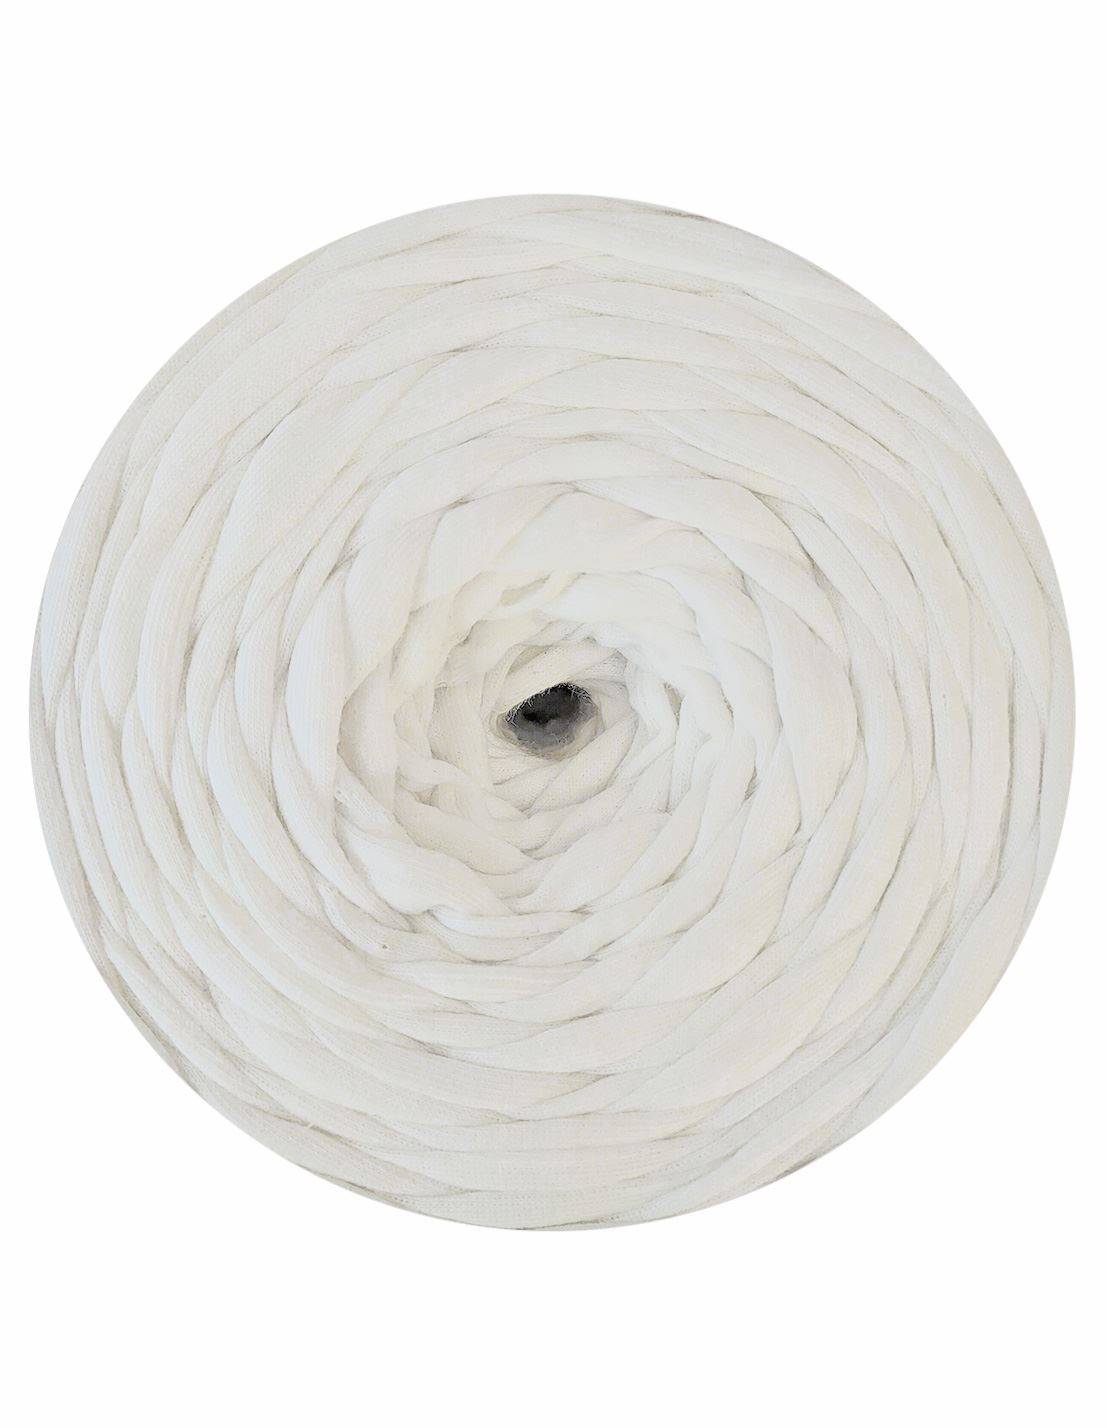 Pale cream t-shirt yarn (100-120m)